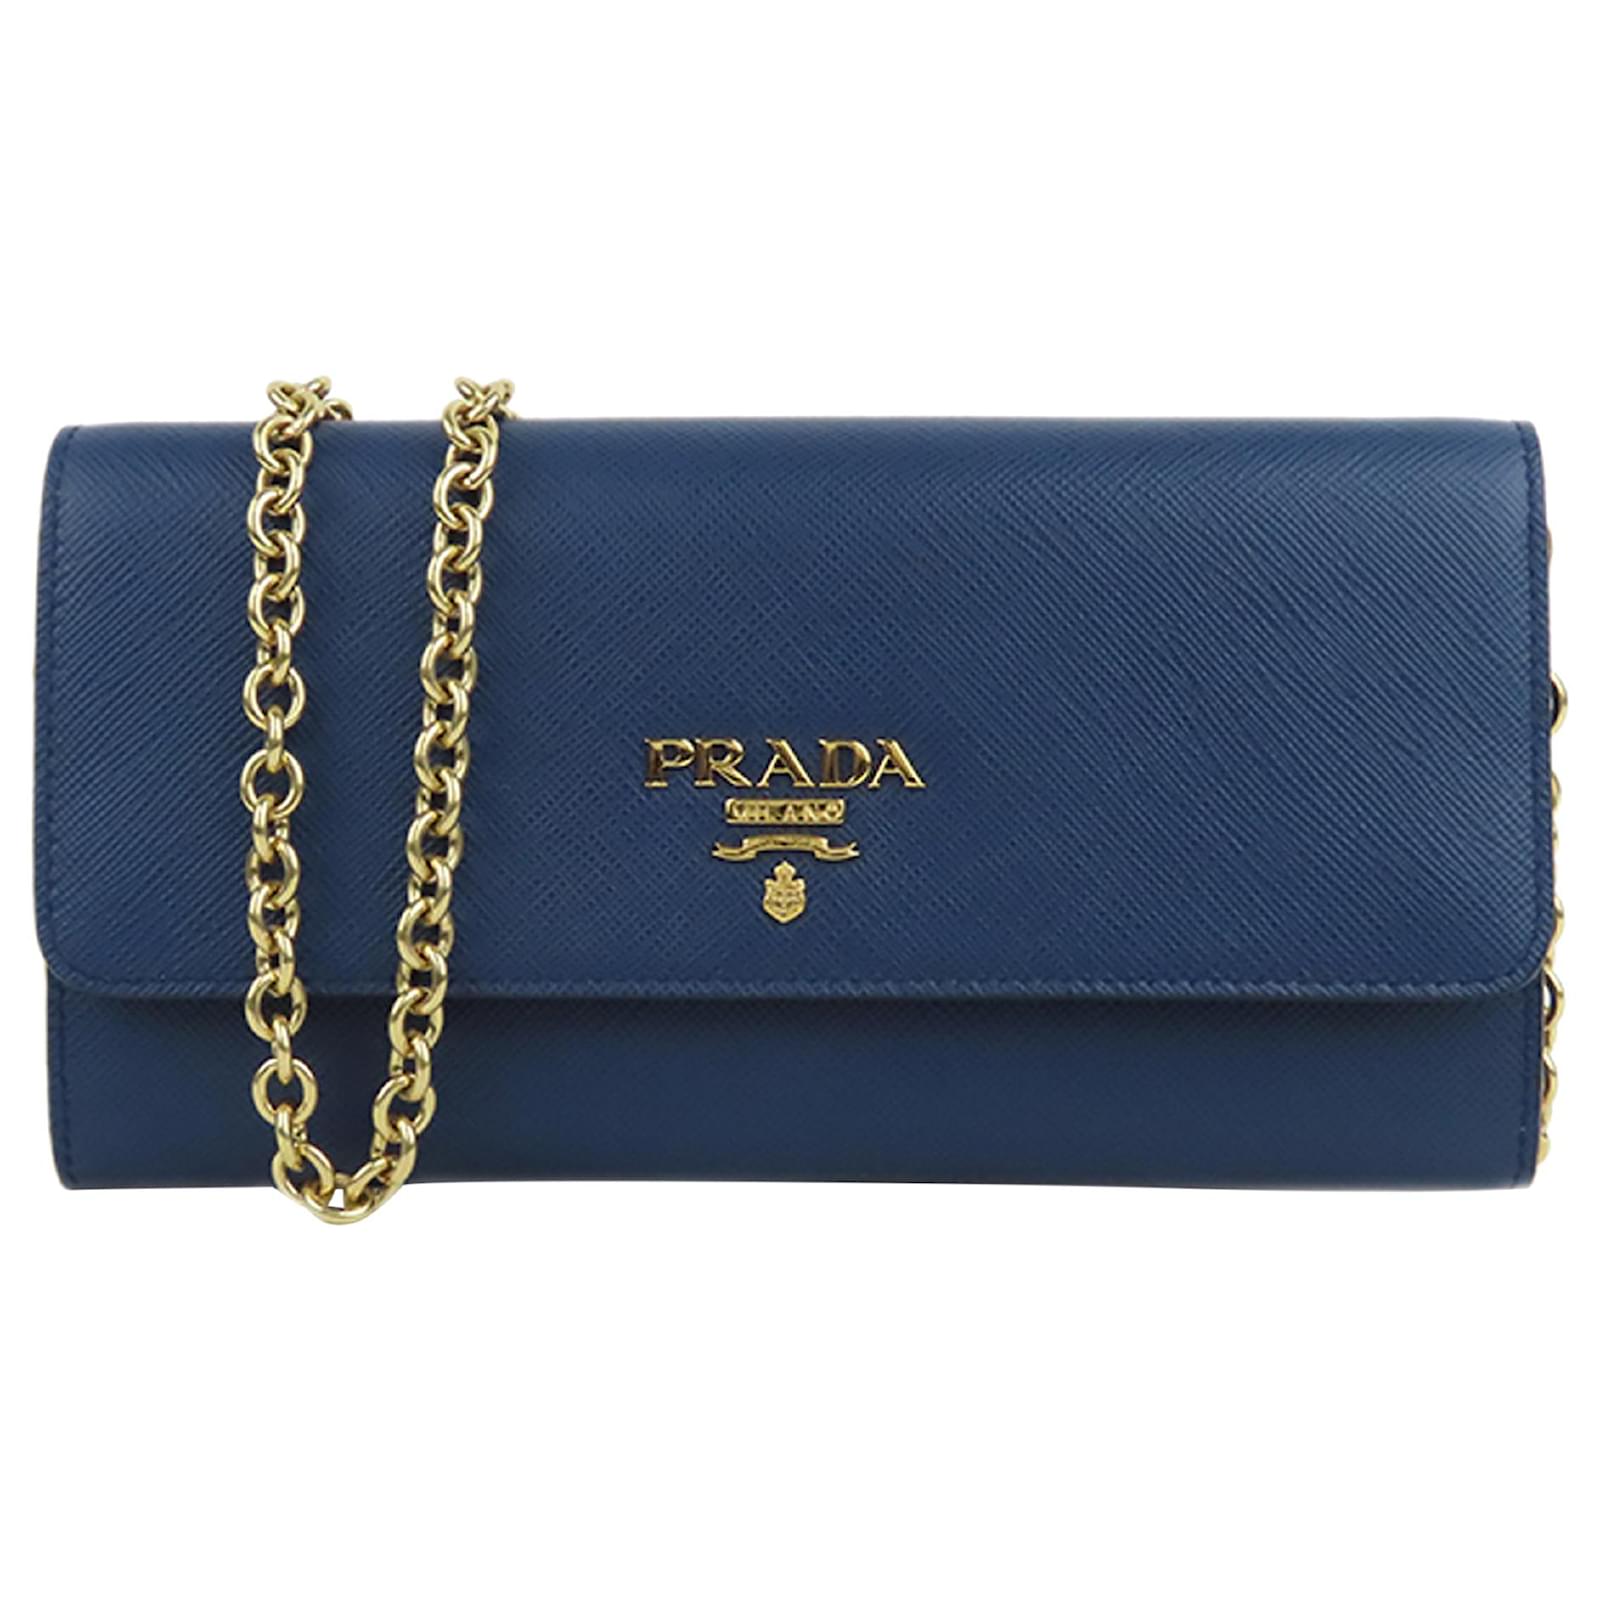 Prada Blue Saffiano Leather Wallet on Chain Pony-style calfskin